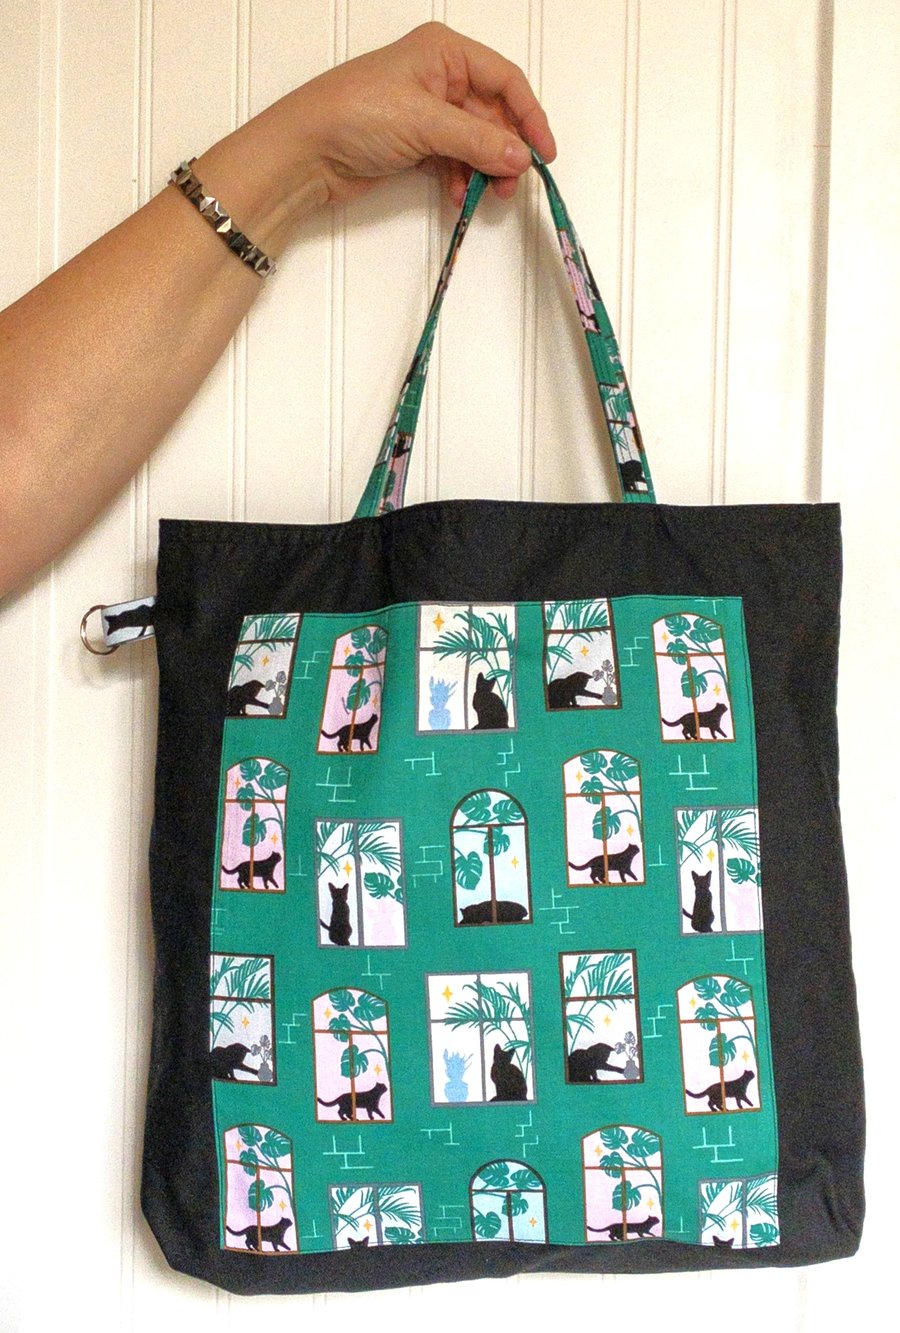 Bag, Tote bag, shopping bag, reusable bag, fabric bag, cats, 